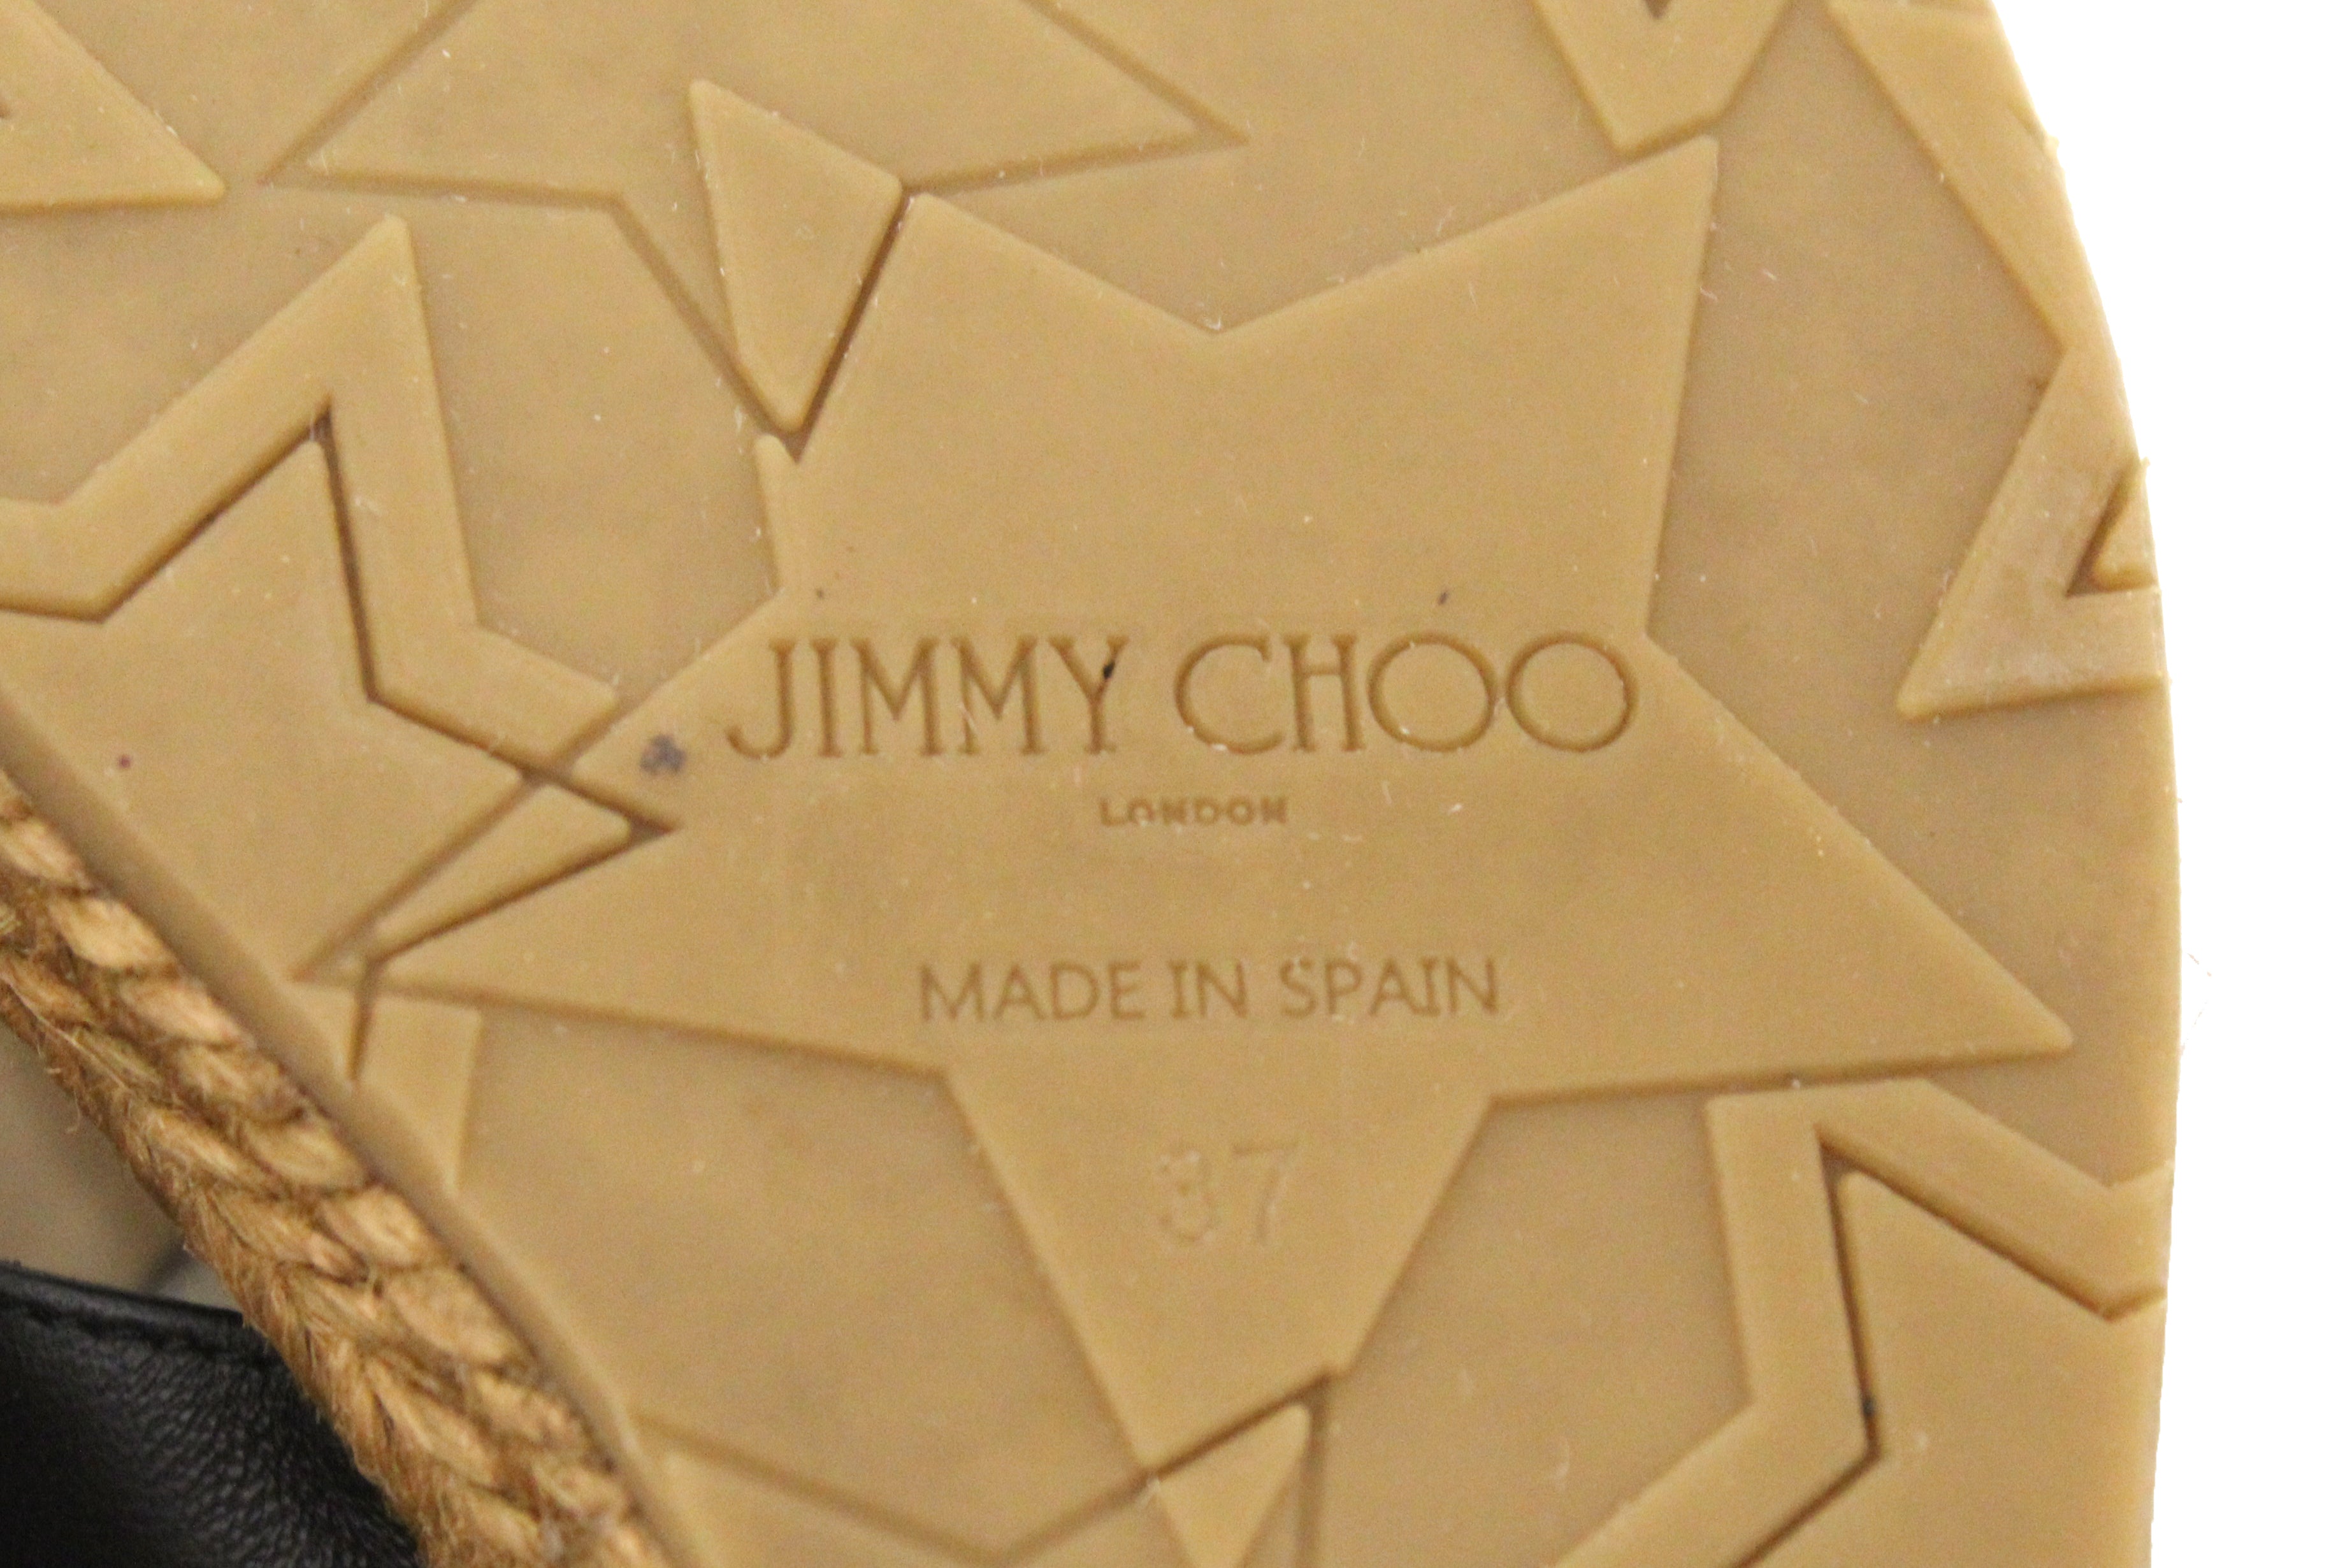 Jimmy Choo Black Leather Wedge Platform Heel Shoes Size 37